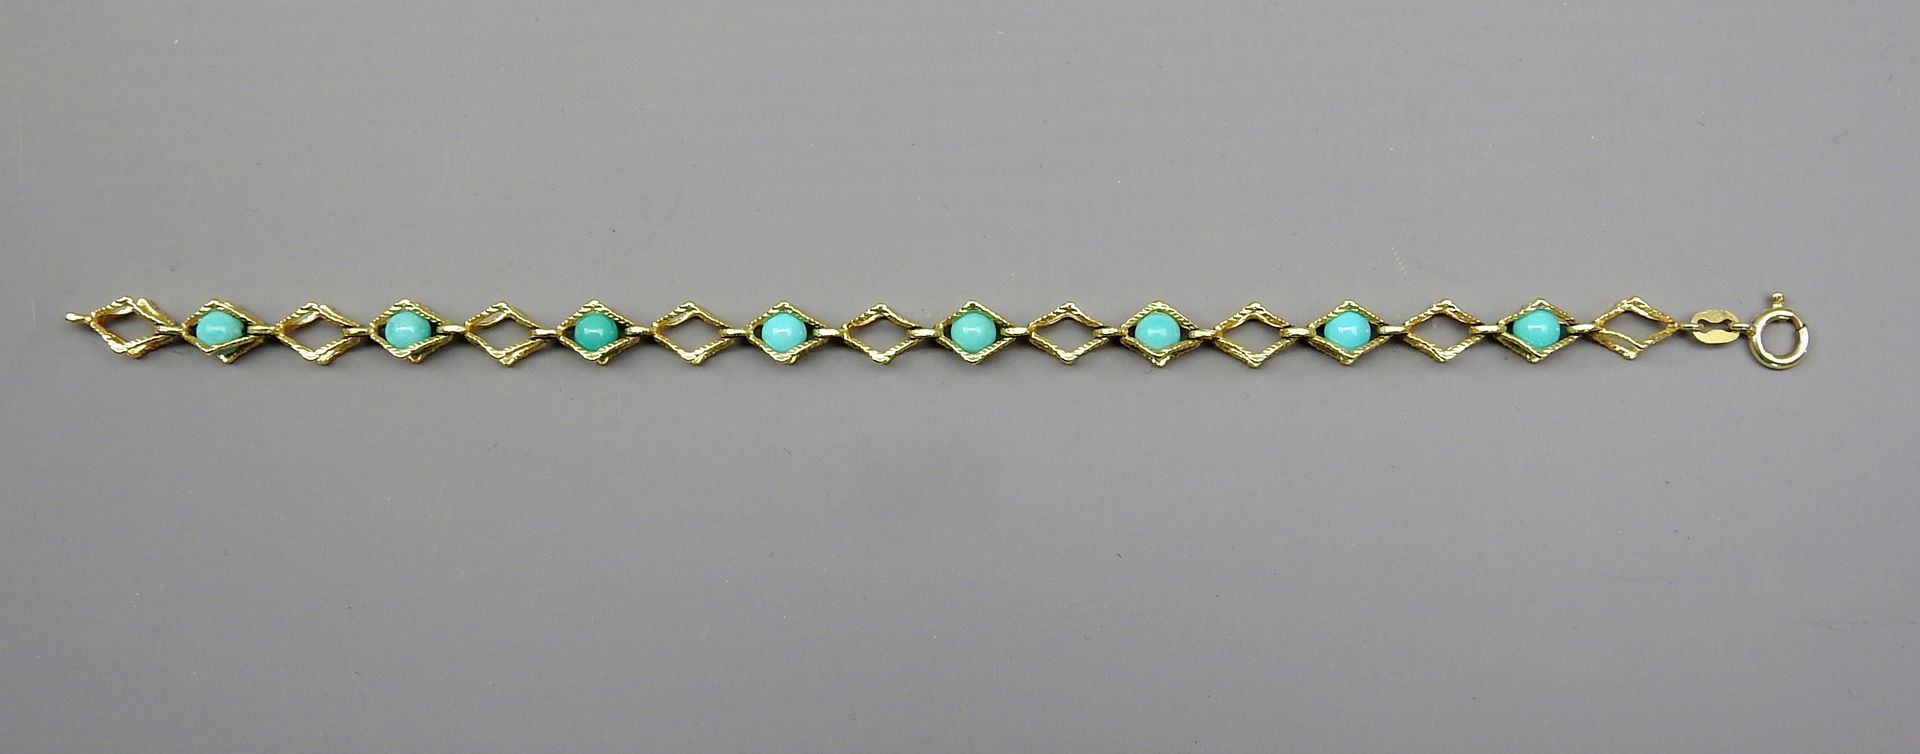 Ungewöhnliches Türkisen-Armband 14K黄金，盖有印章。手链镶有8颗绿松石。德国，1970年代。长约19厘米，重约8克